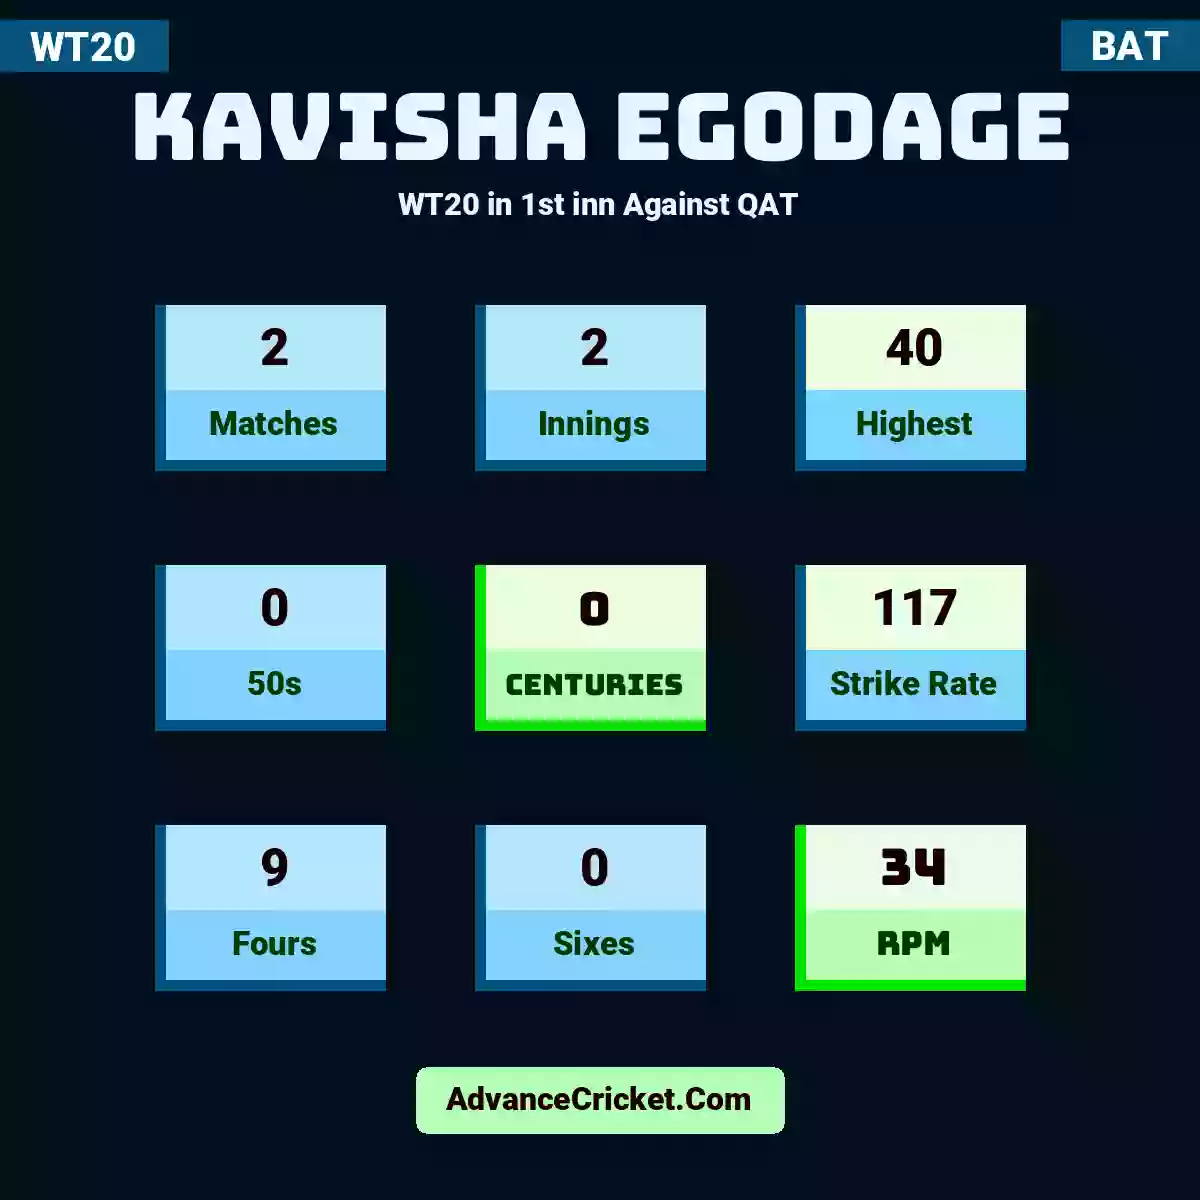 Kavisha Egodage WT20  in 1st inn Against QAT, Kavisha Egodage played 2 matches, scored 40 runs as highest, 0 half-centuries, and 0 centuries, with a strike rate of 117. K.Egodage hit 9 fours and 0 sixes, with an RPM of 34.